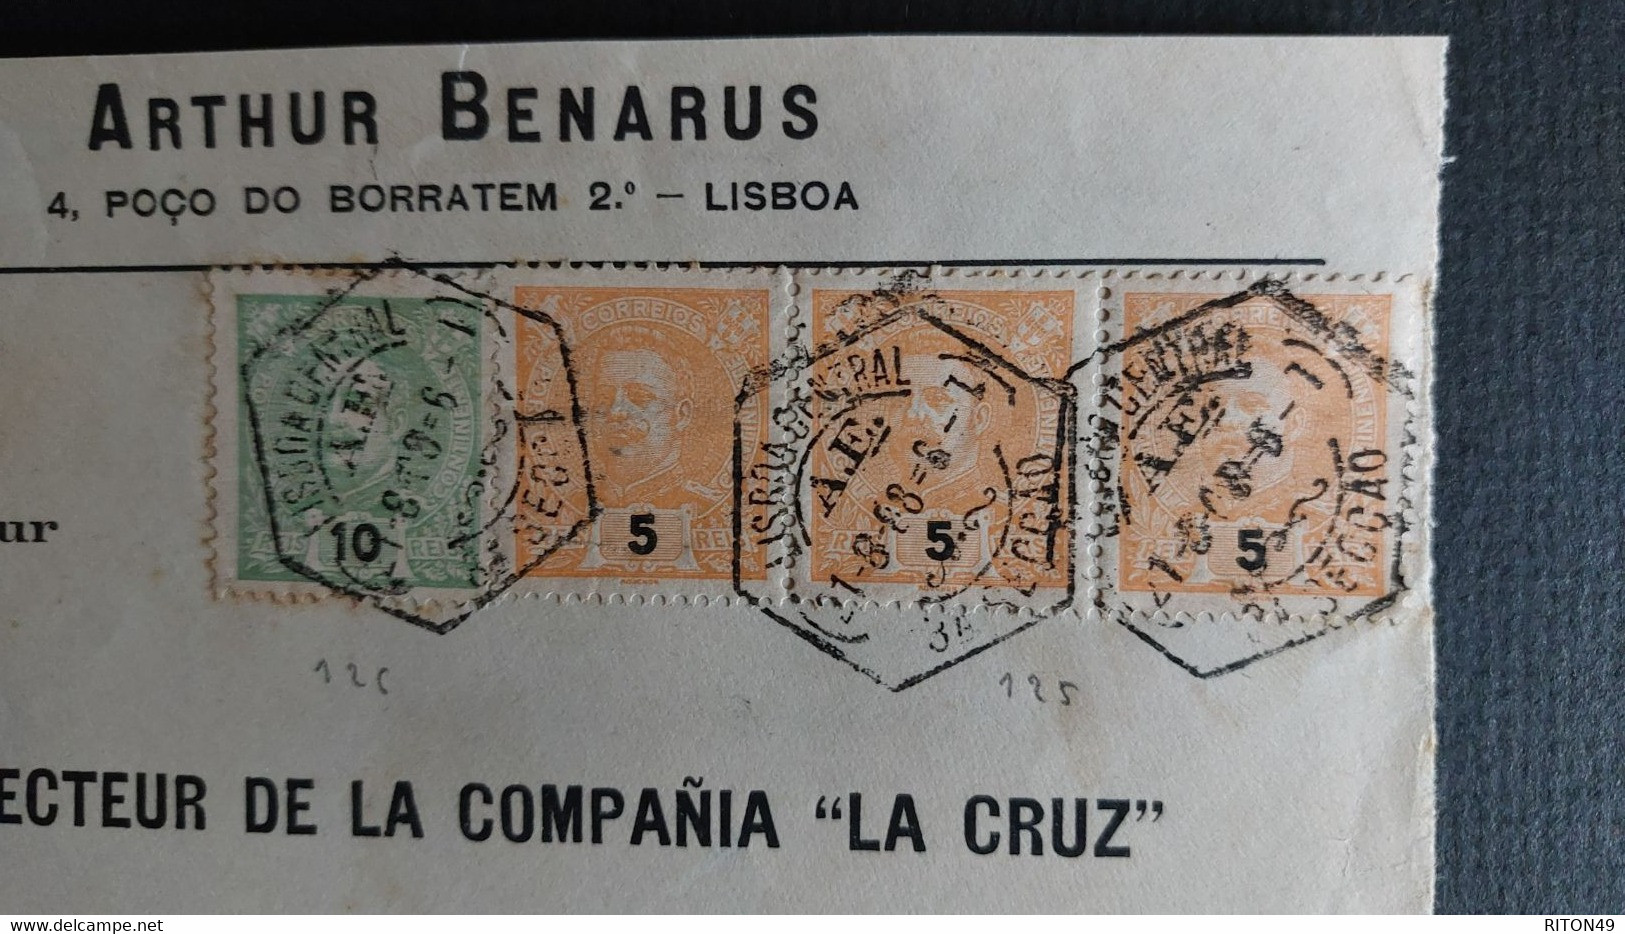 PARTIE DE LETTRE 1888 LIBOA A LINARES D CARLOS I CAD LISBOA - Briefe U. Dokumente